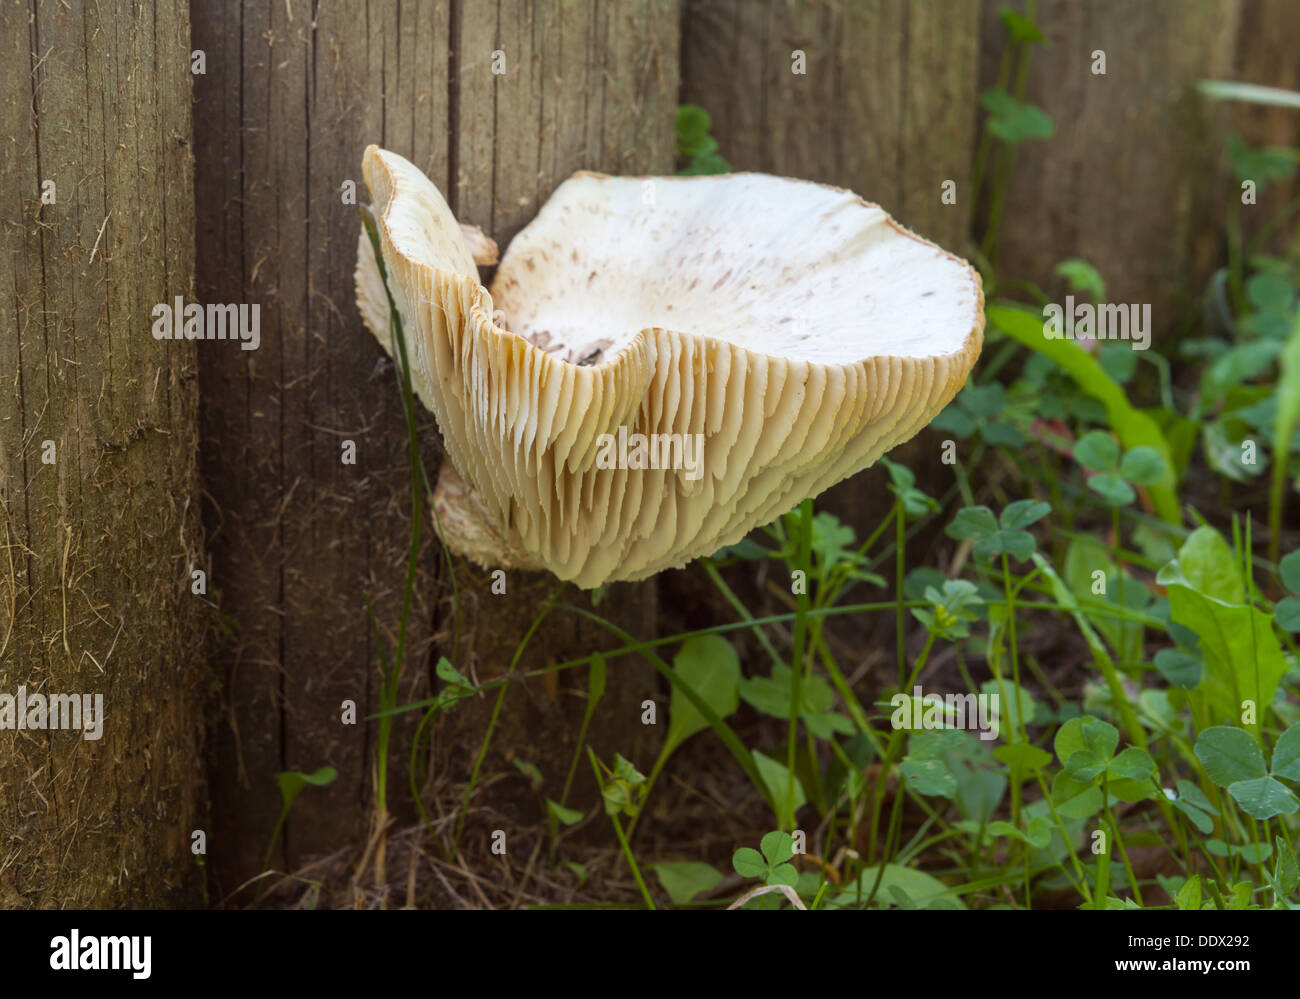 Neolentinus lepideus mushroom Stock Photo